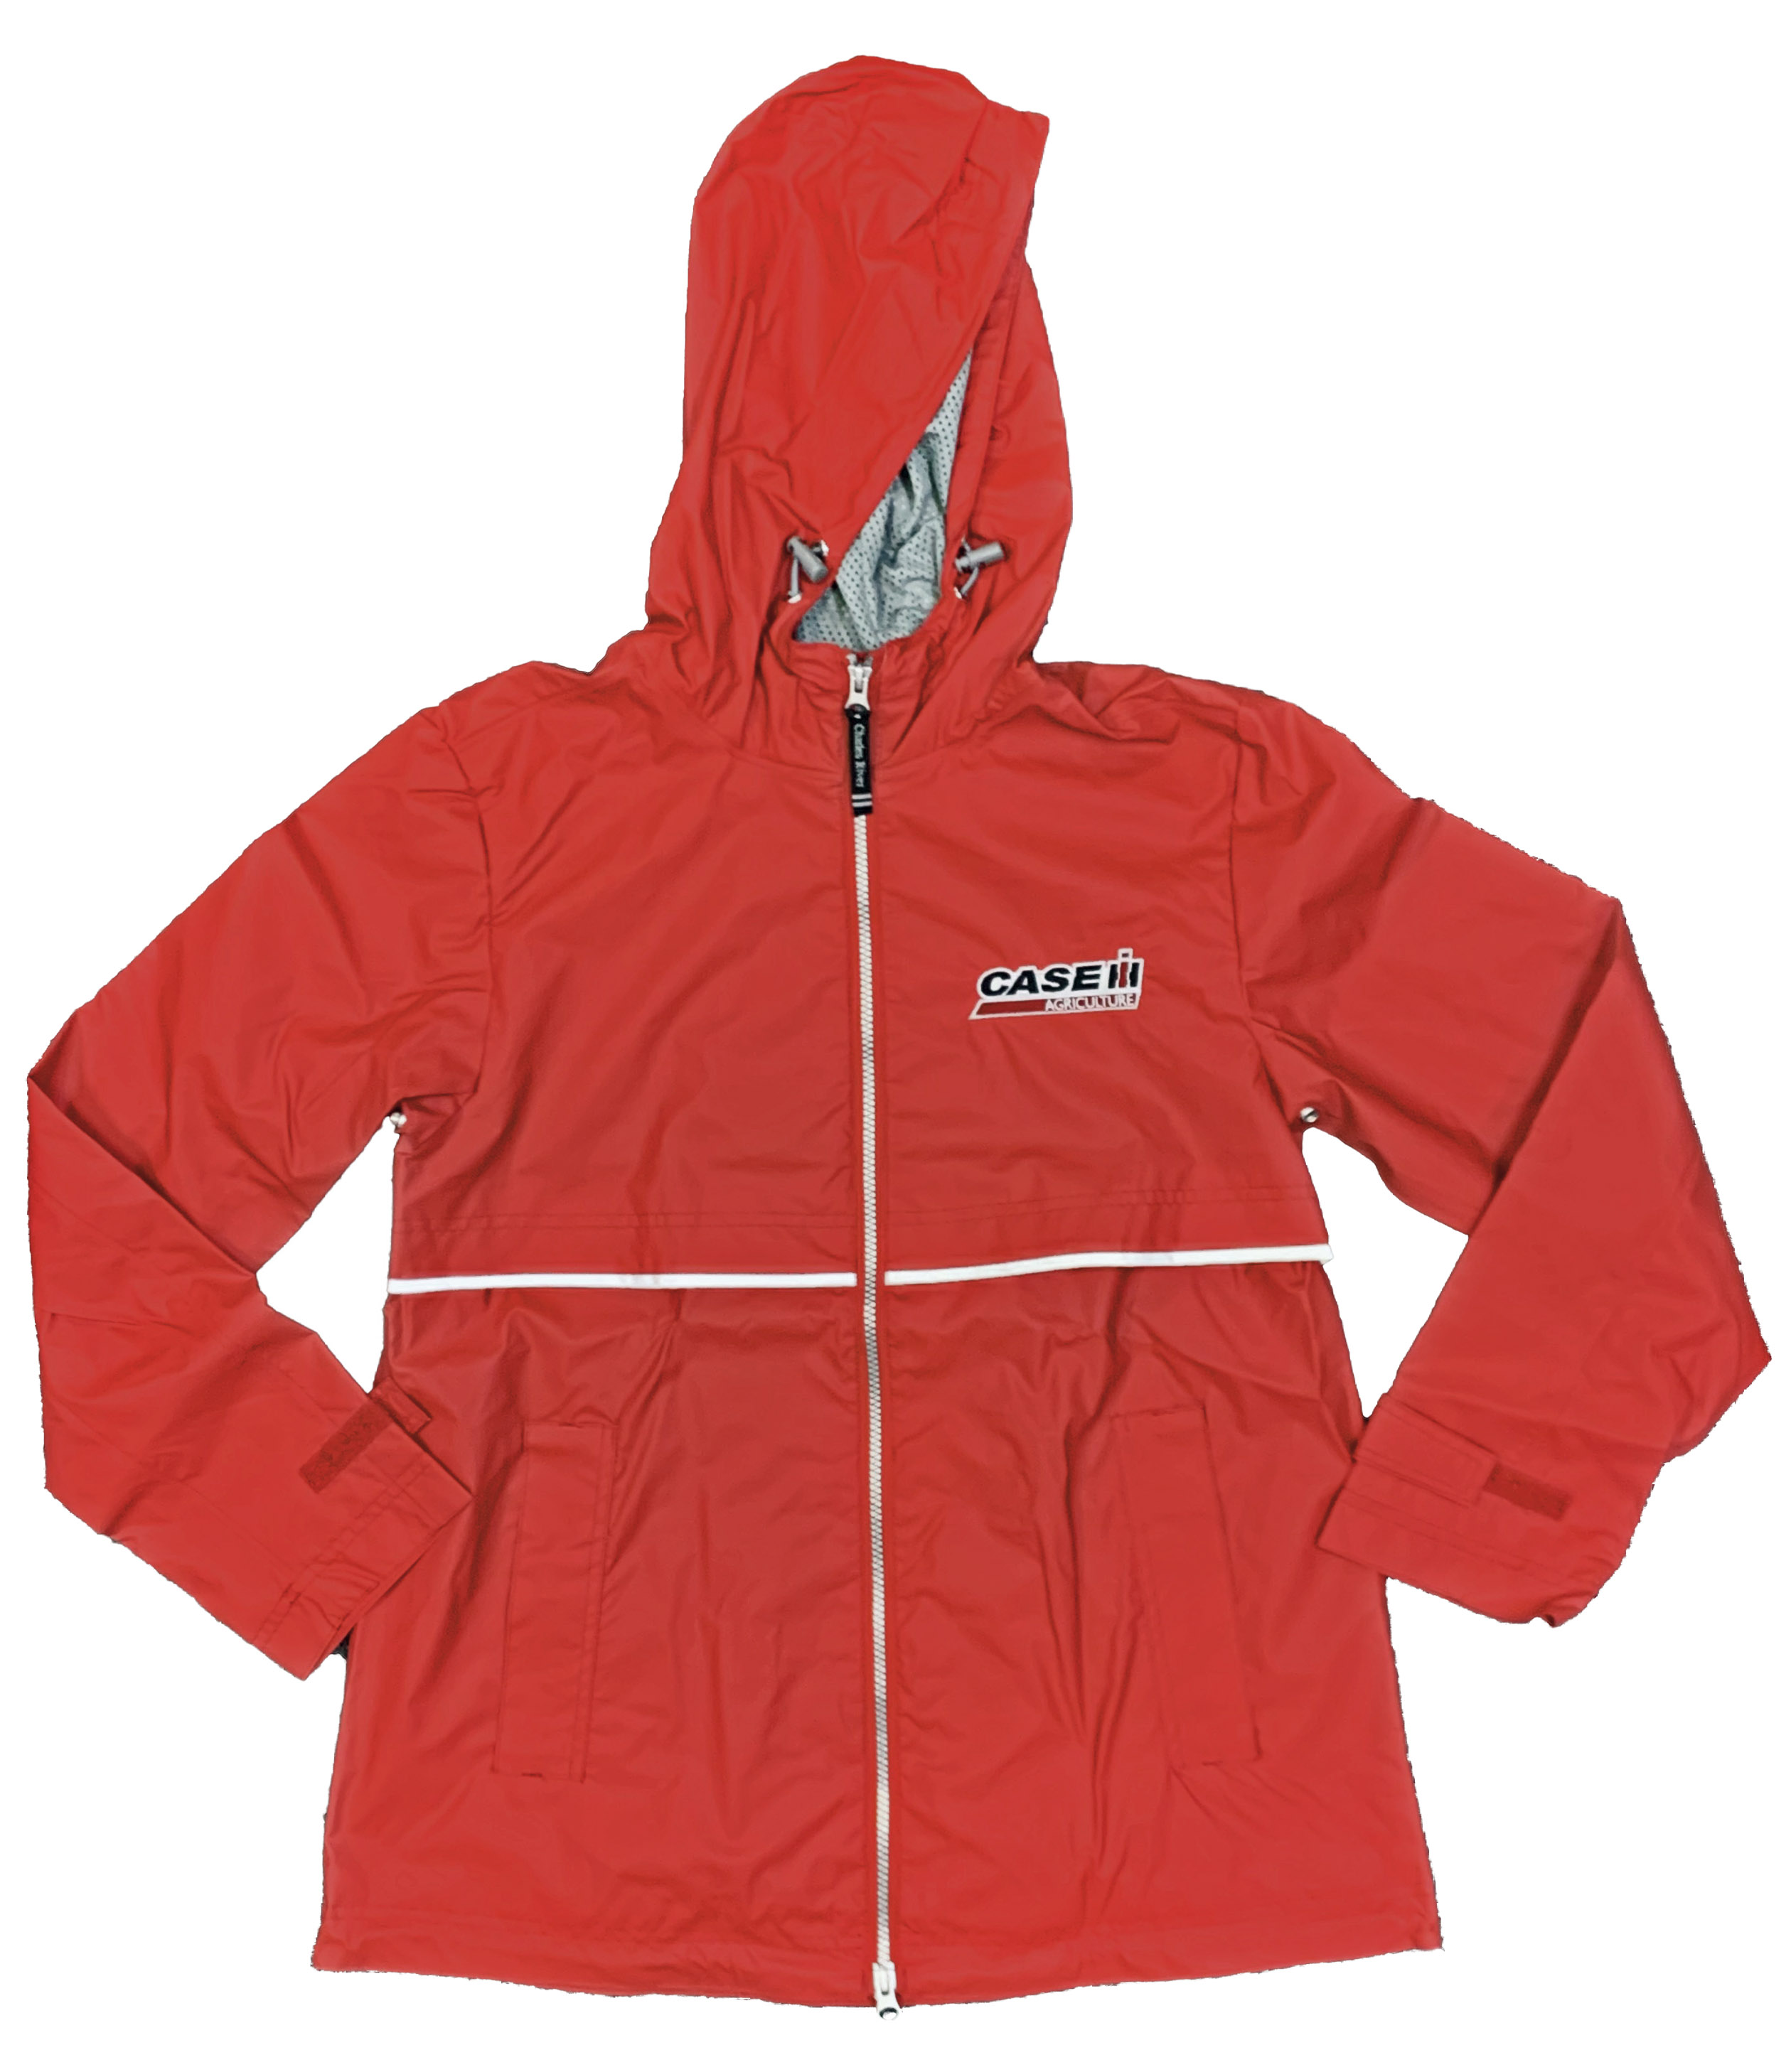 Jacket-Red Rain Coat-CaseIH Logo-Ladies 150019 » Case IH Licensed Products